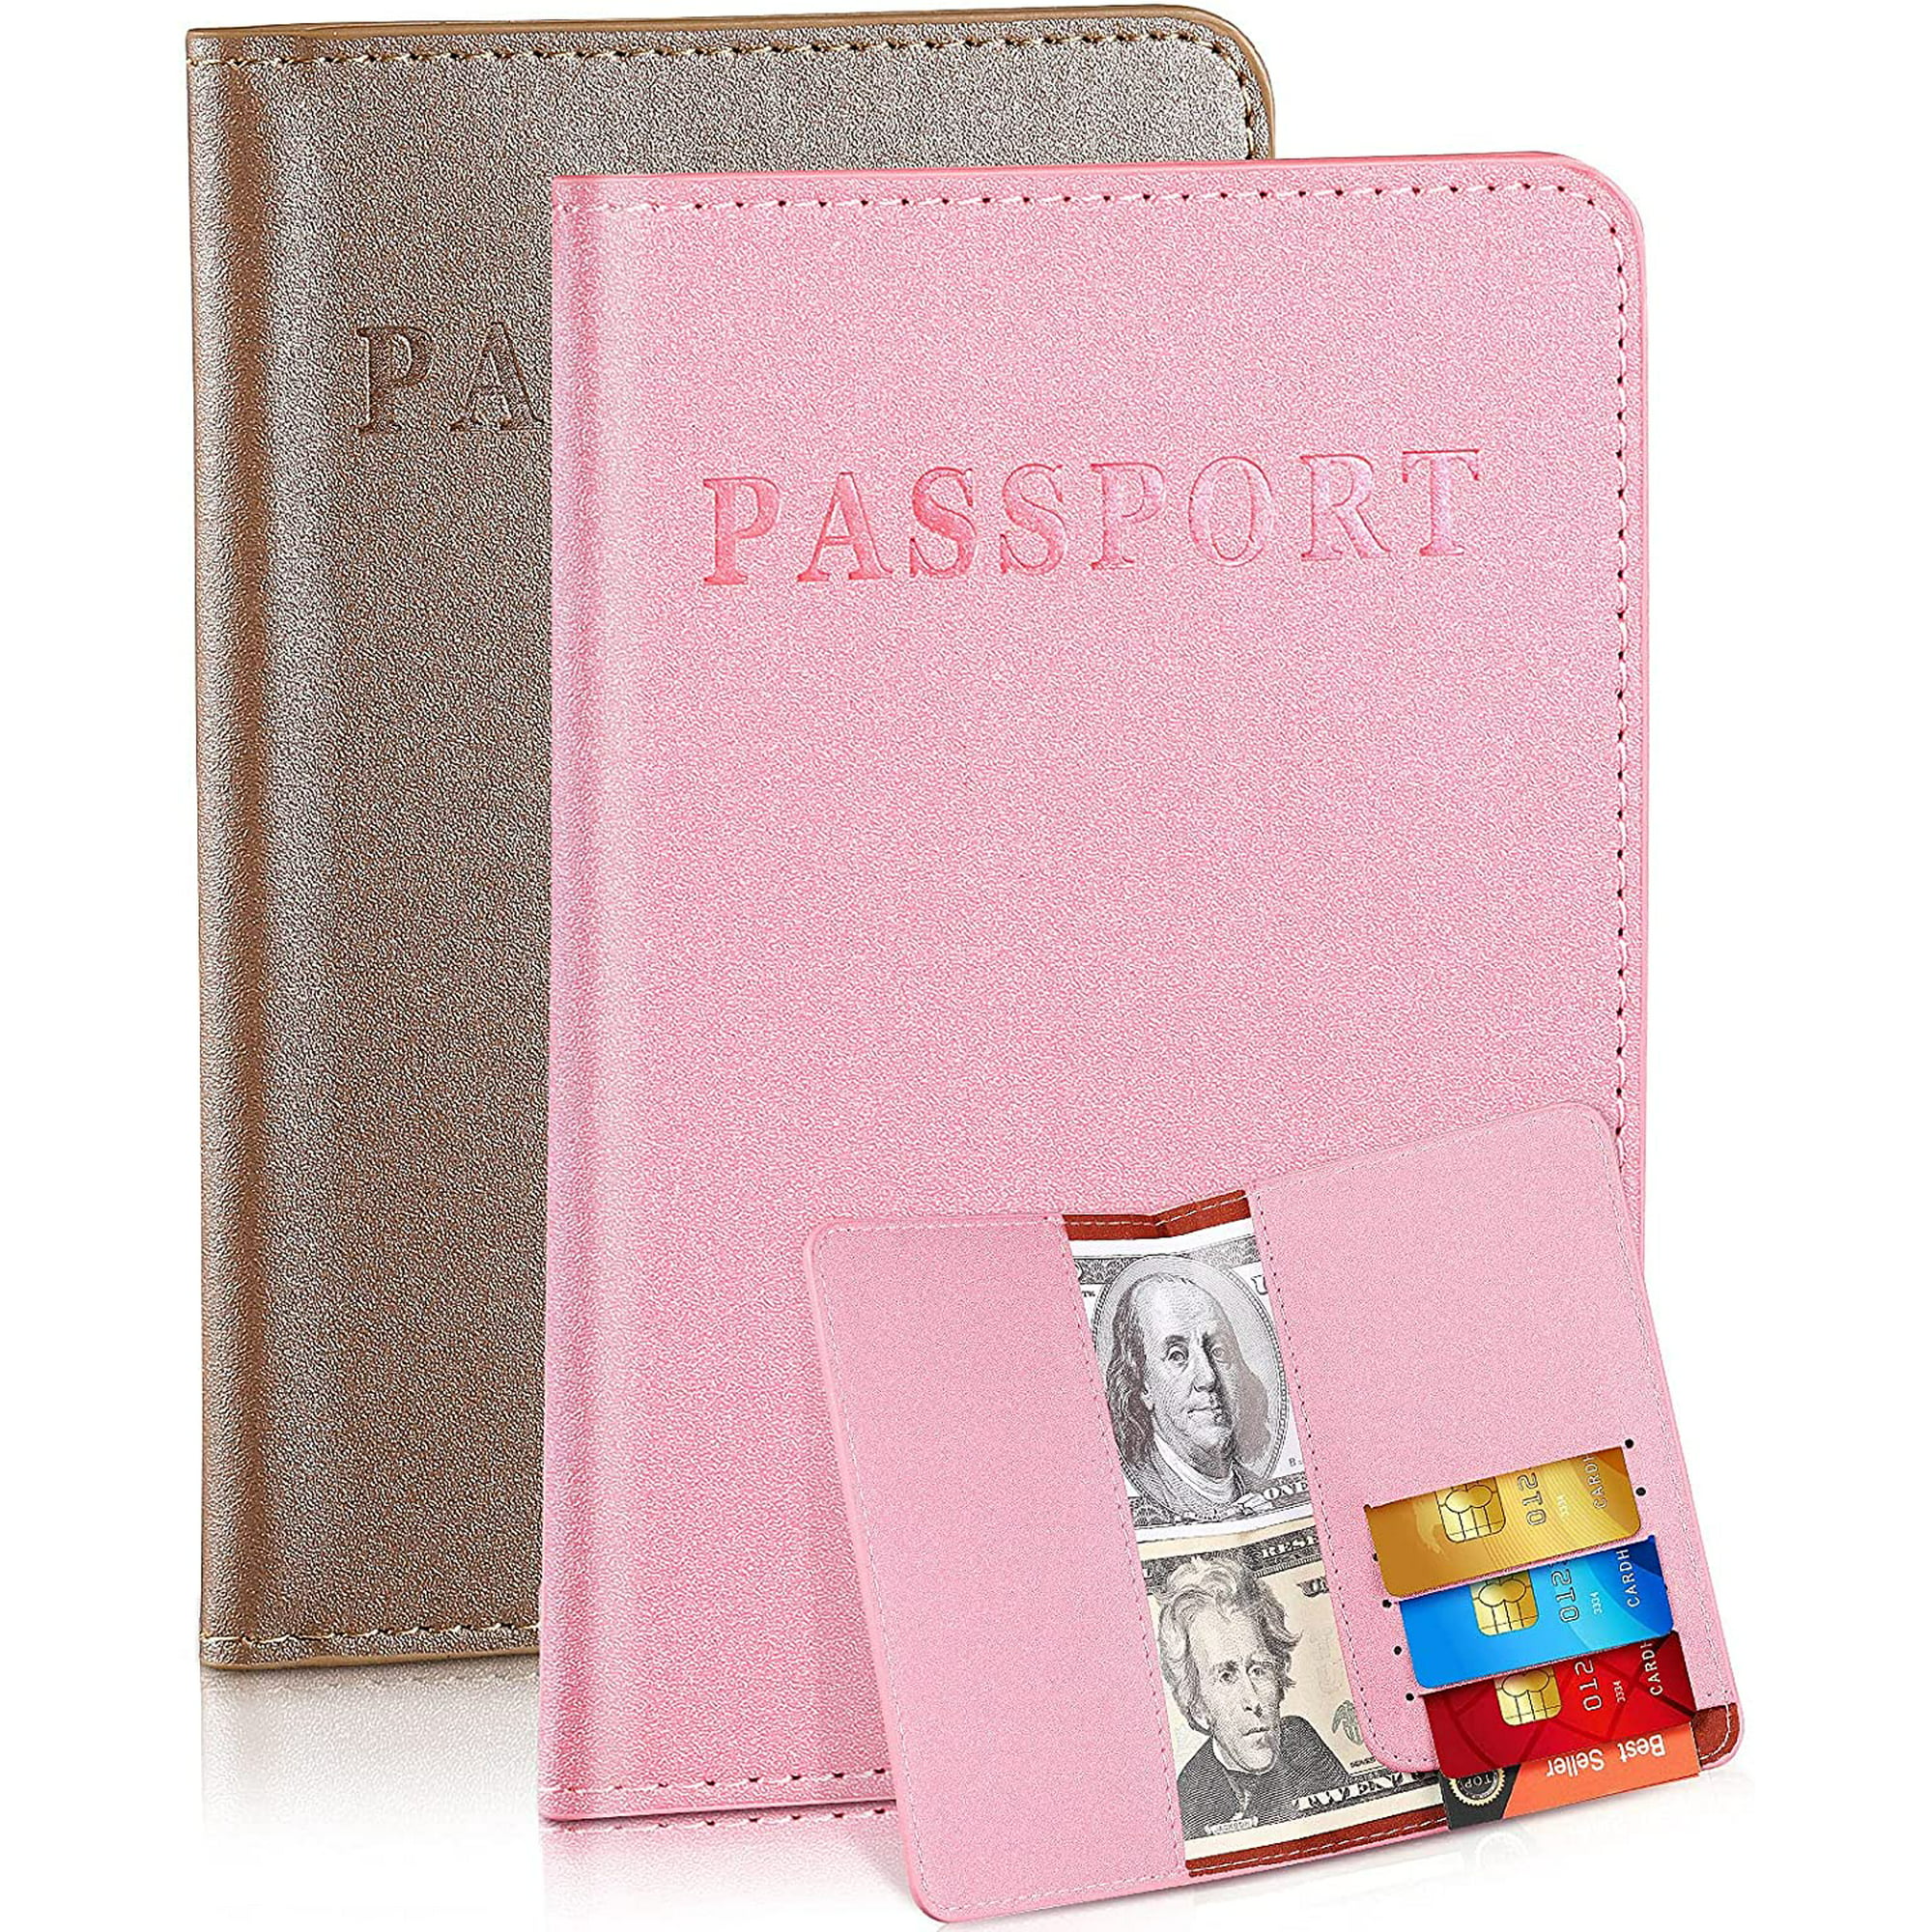 Passport Cover USA Paris London Design Card Wallet protector Holder Cover 